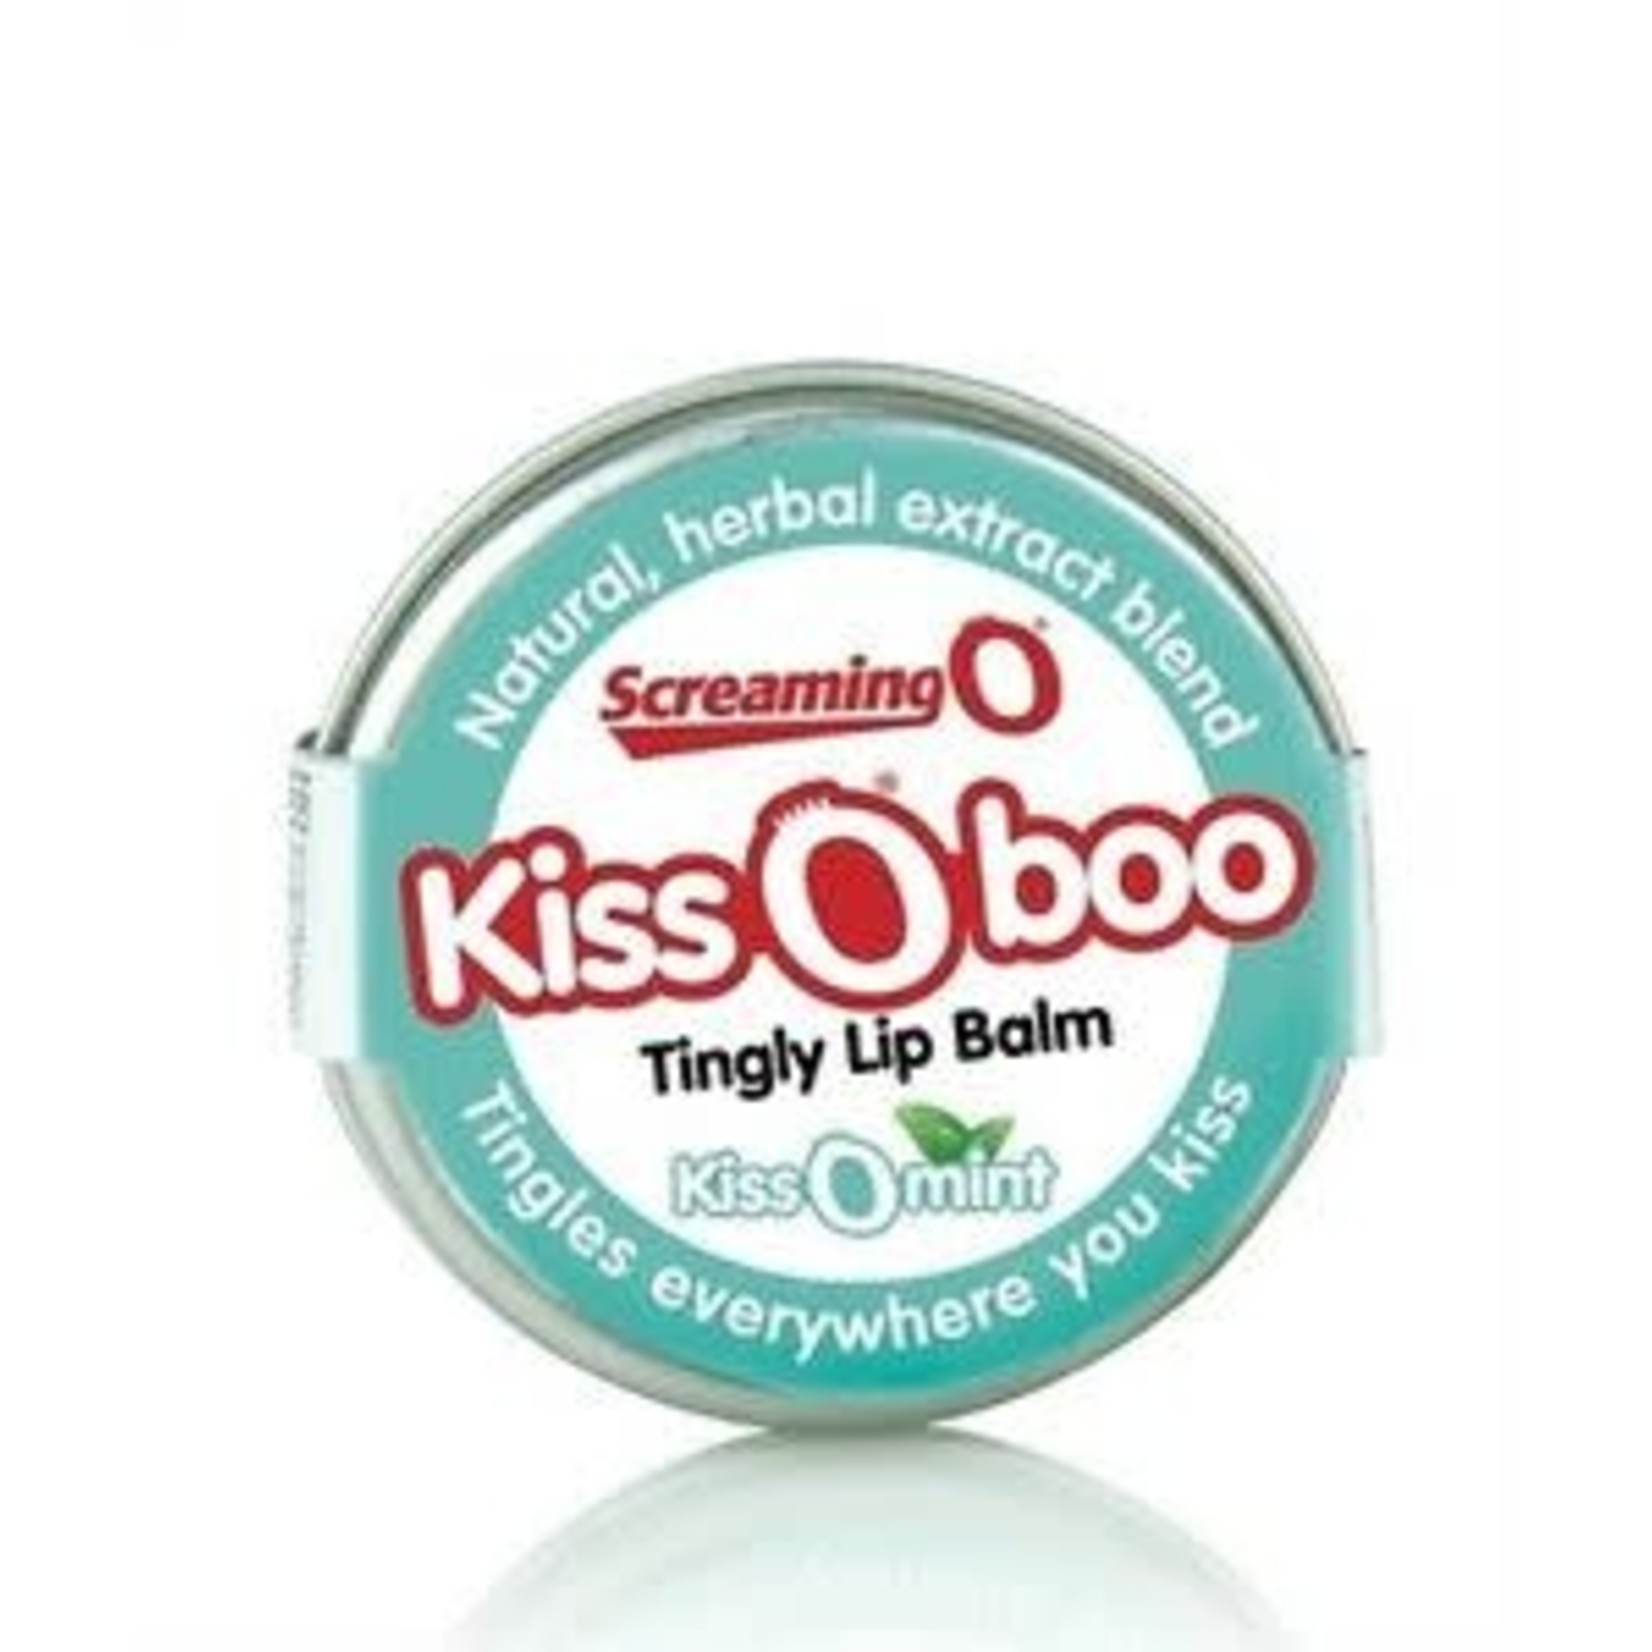 SCREAMING O SCREAMING O - KISSOBOO TINGLY LIP BALM - KISSOMINT